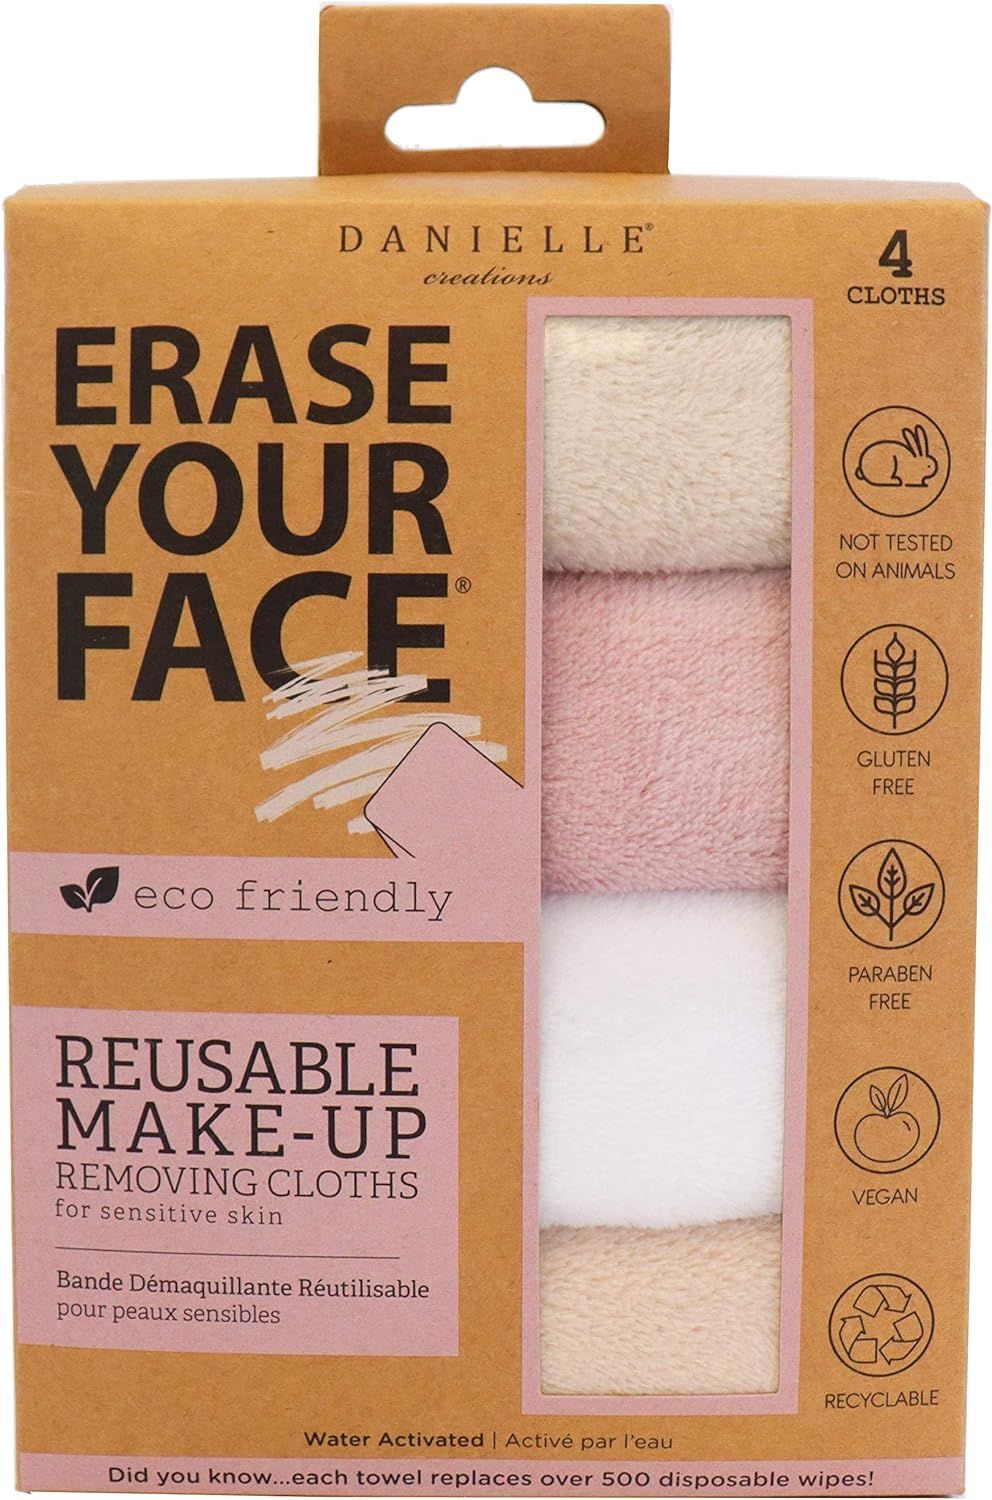 ERASE YOUR FACE Face Reusable Makeup Removing Cloths With Friendly Packaging By Danielle Enterprises | Amazon (US)